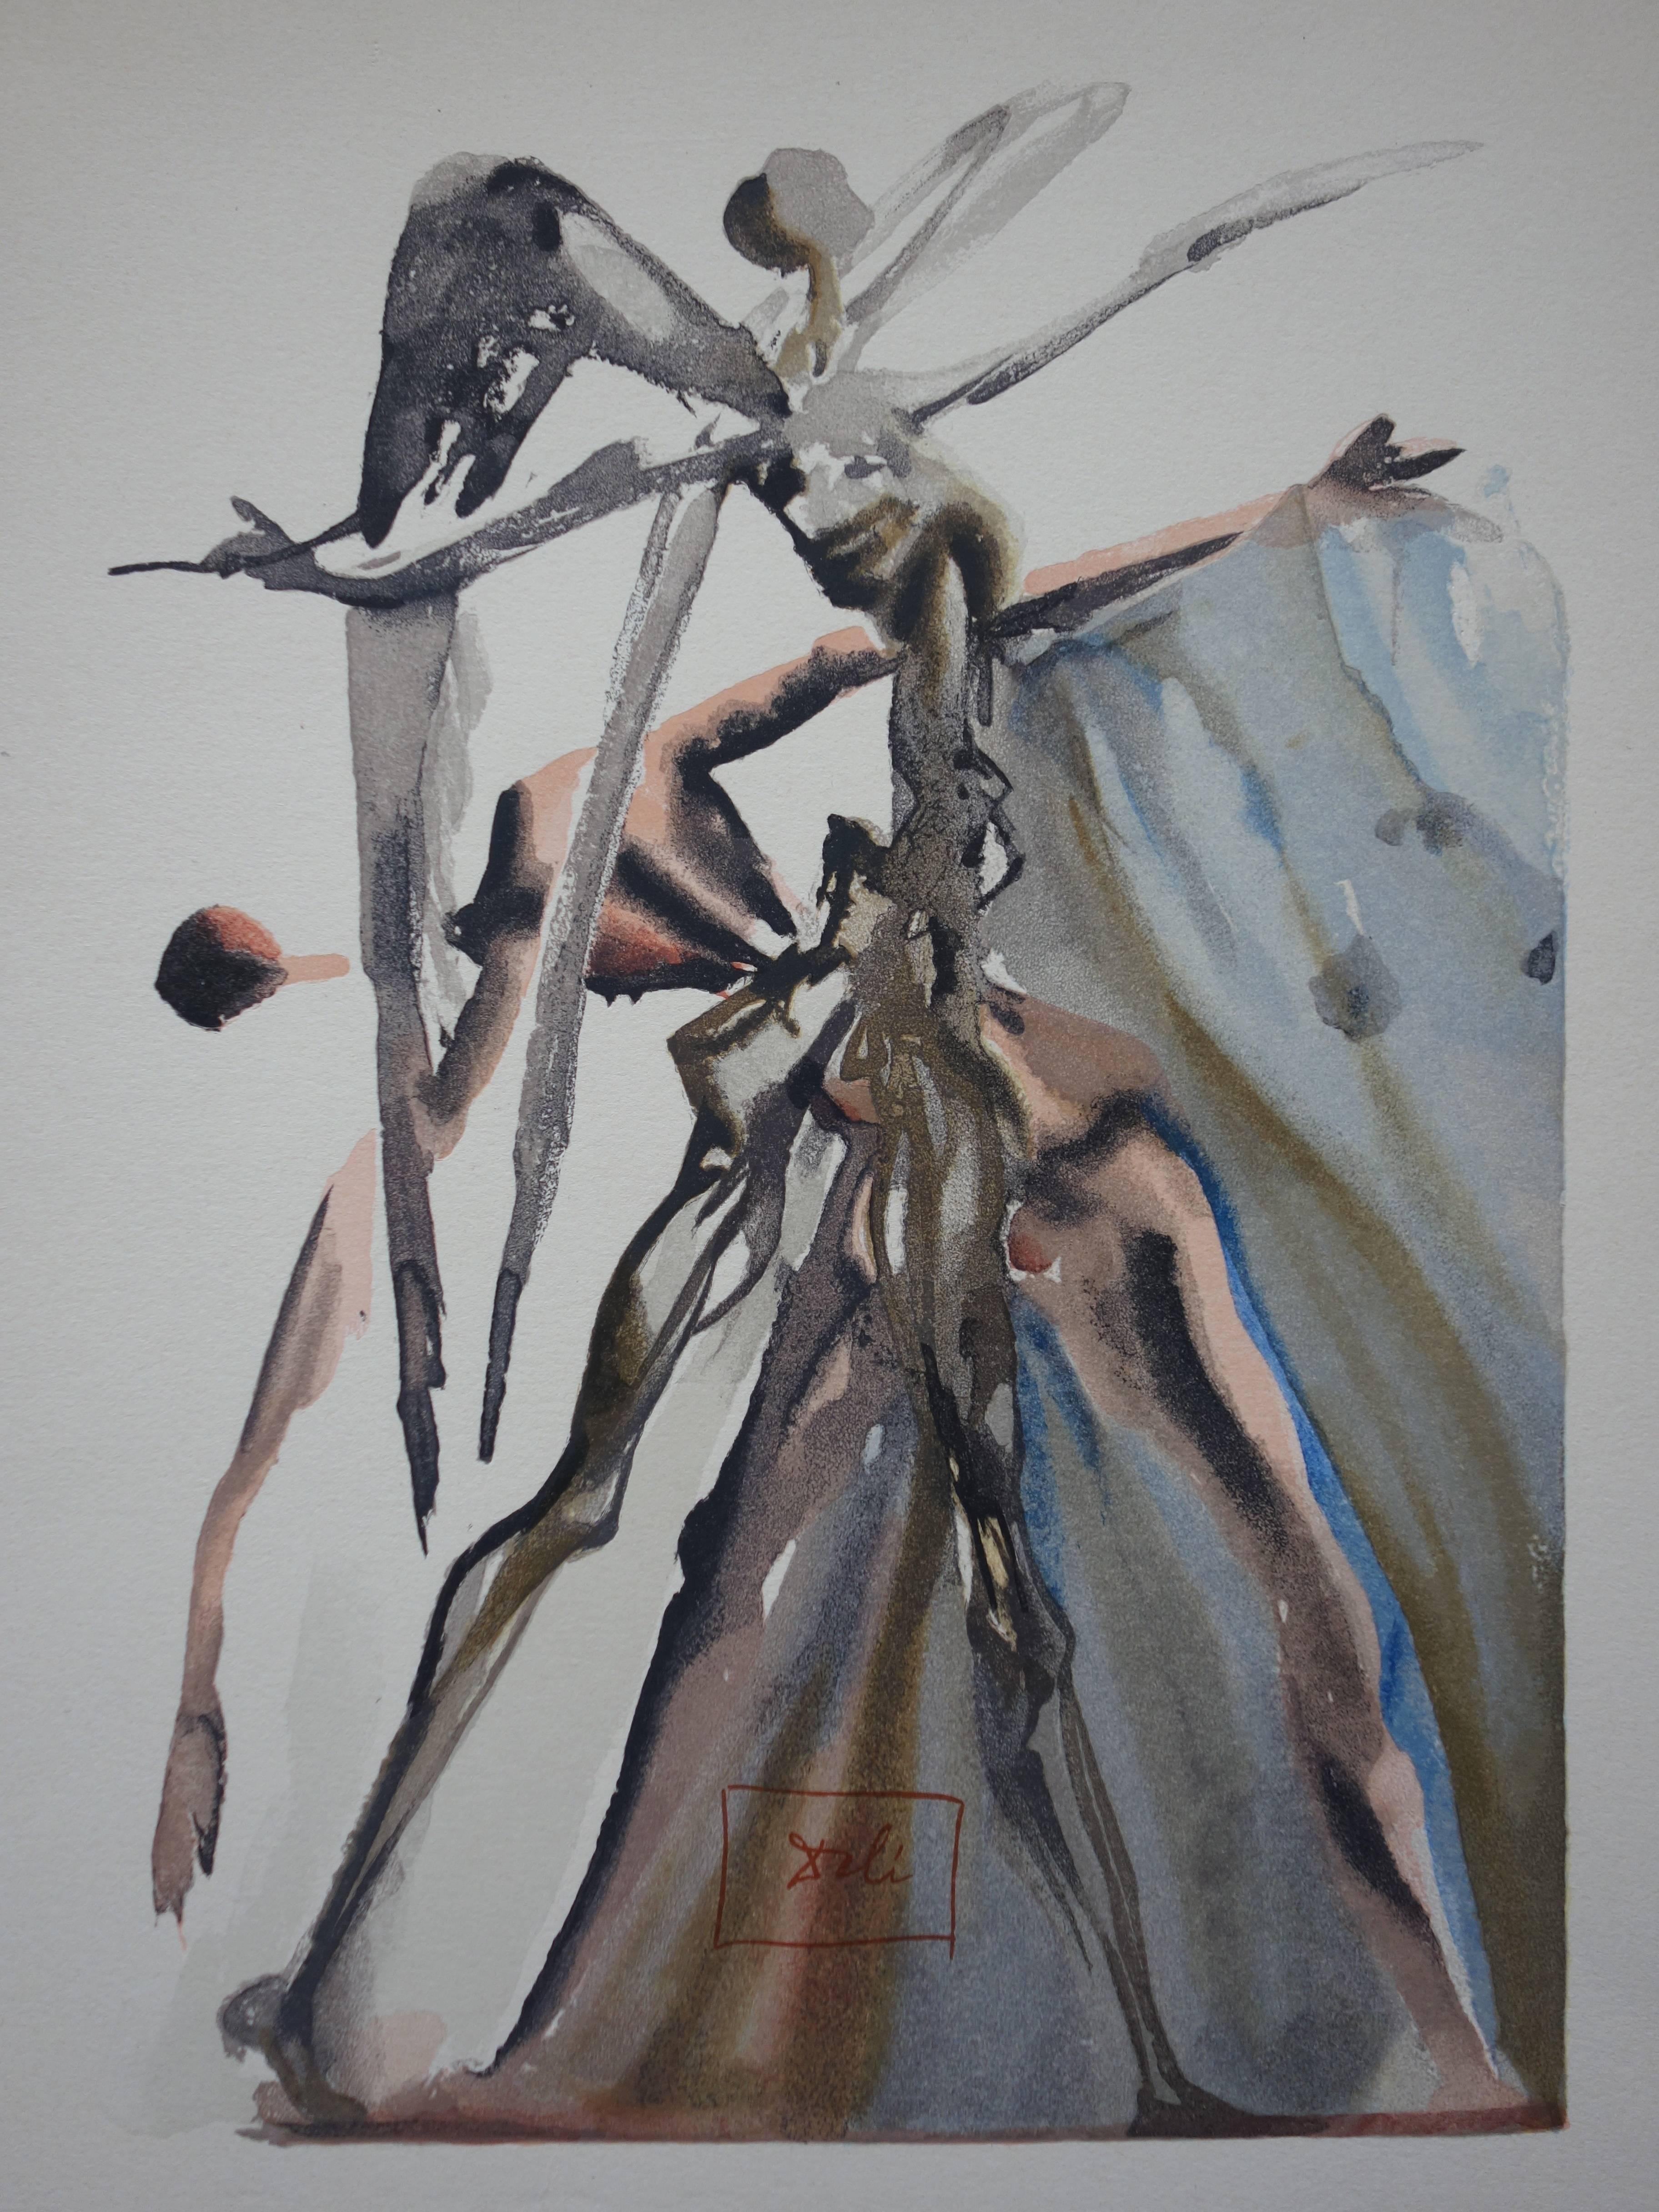 Purgatory 4 : The Negligent - Woodcut - 1963 - Gray Figurative Print by Salvador Dalí